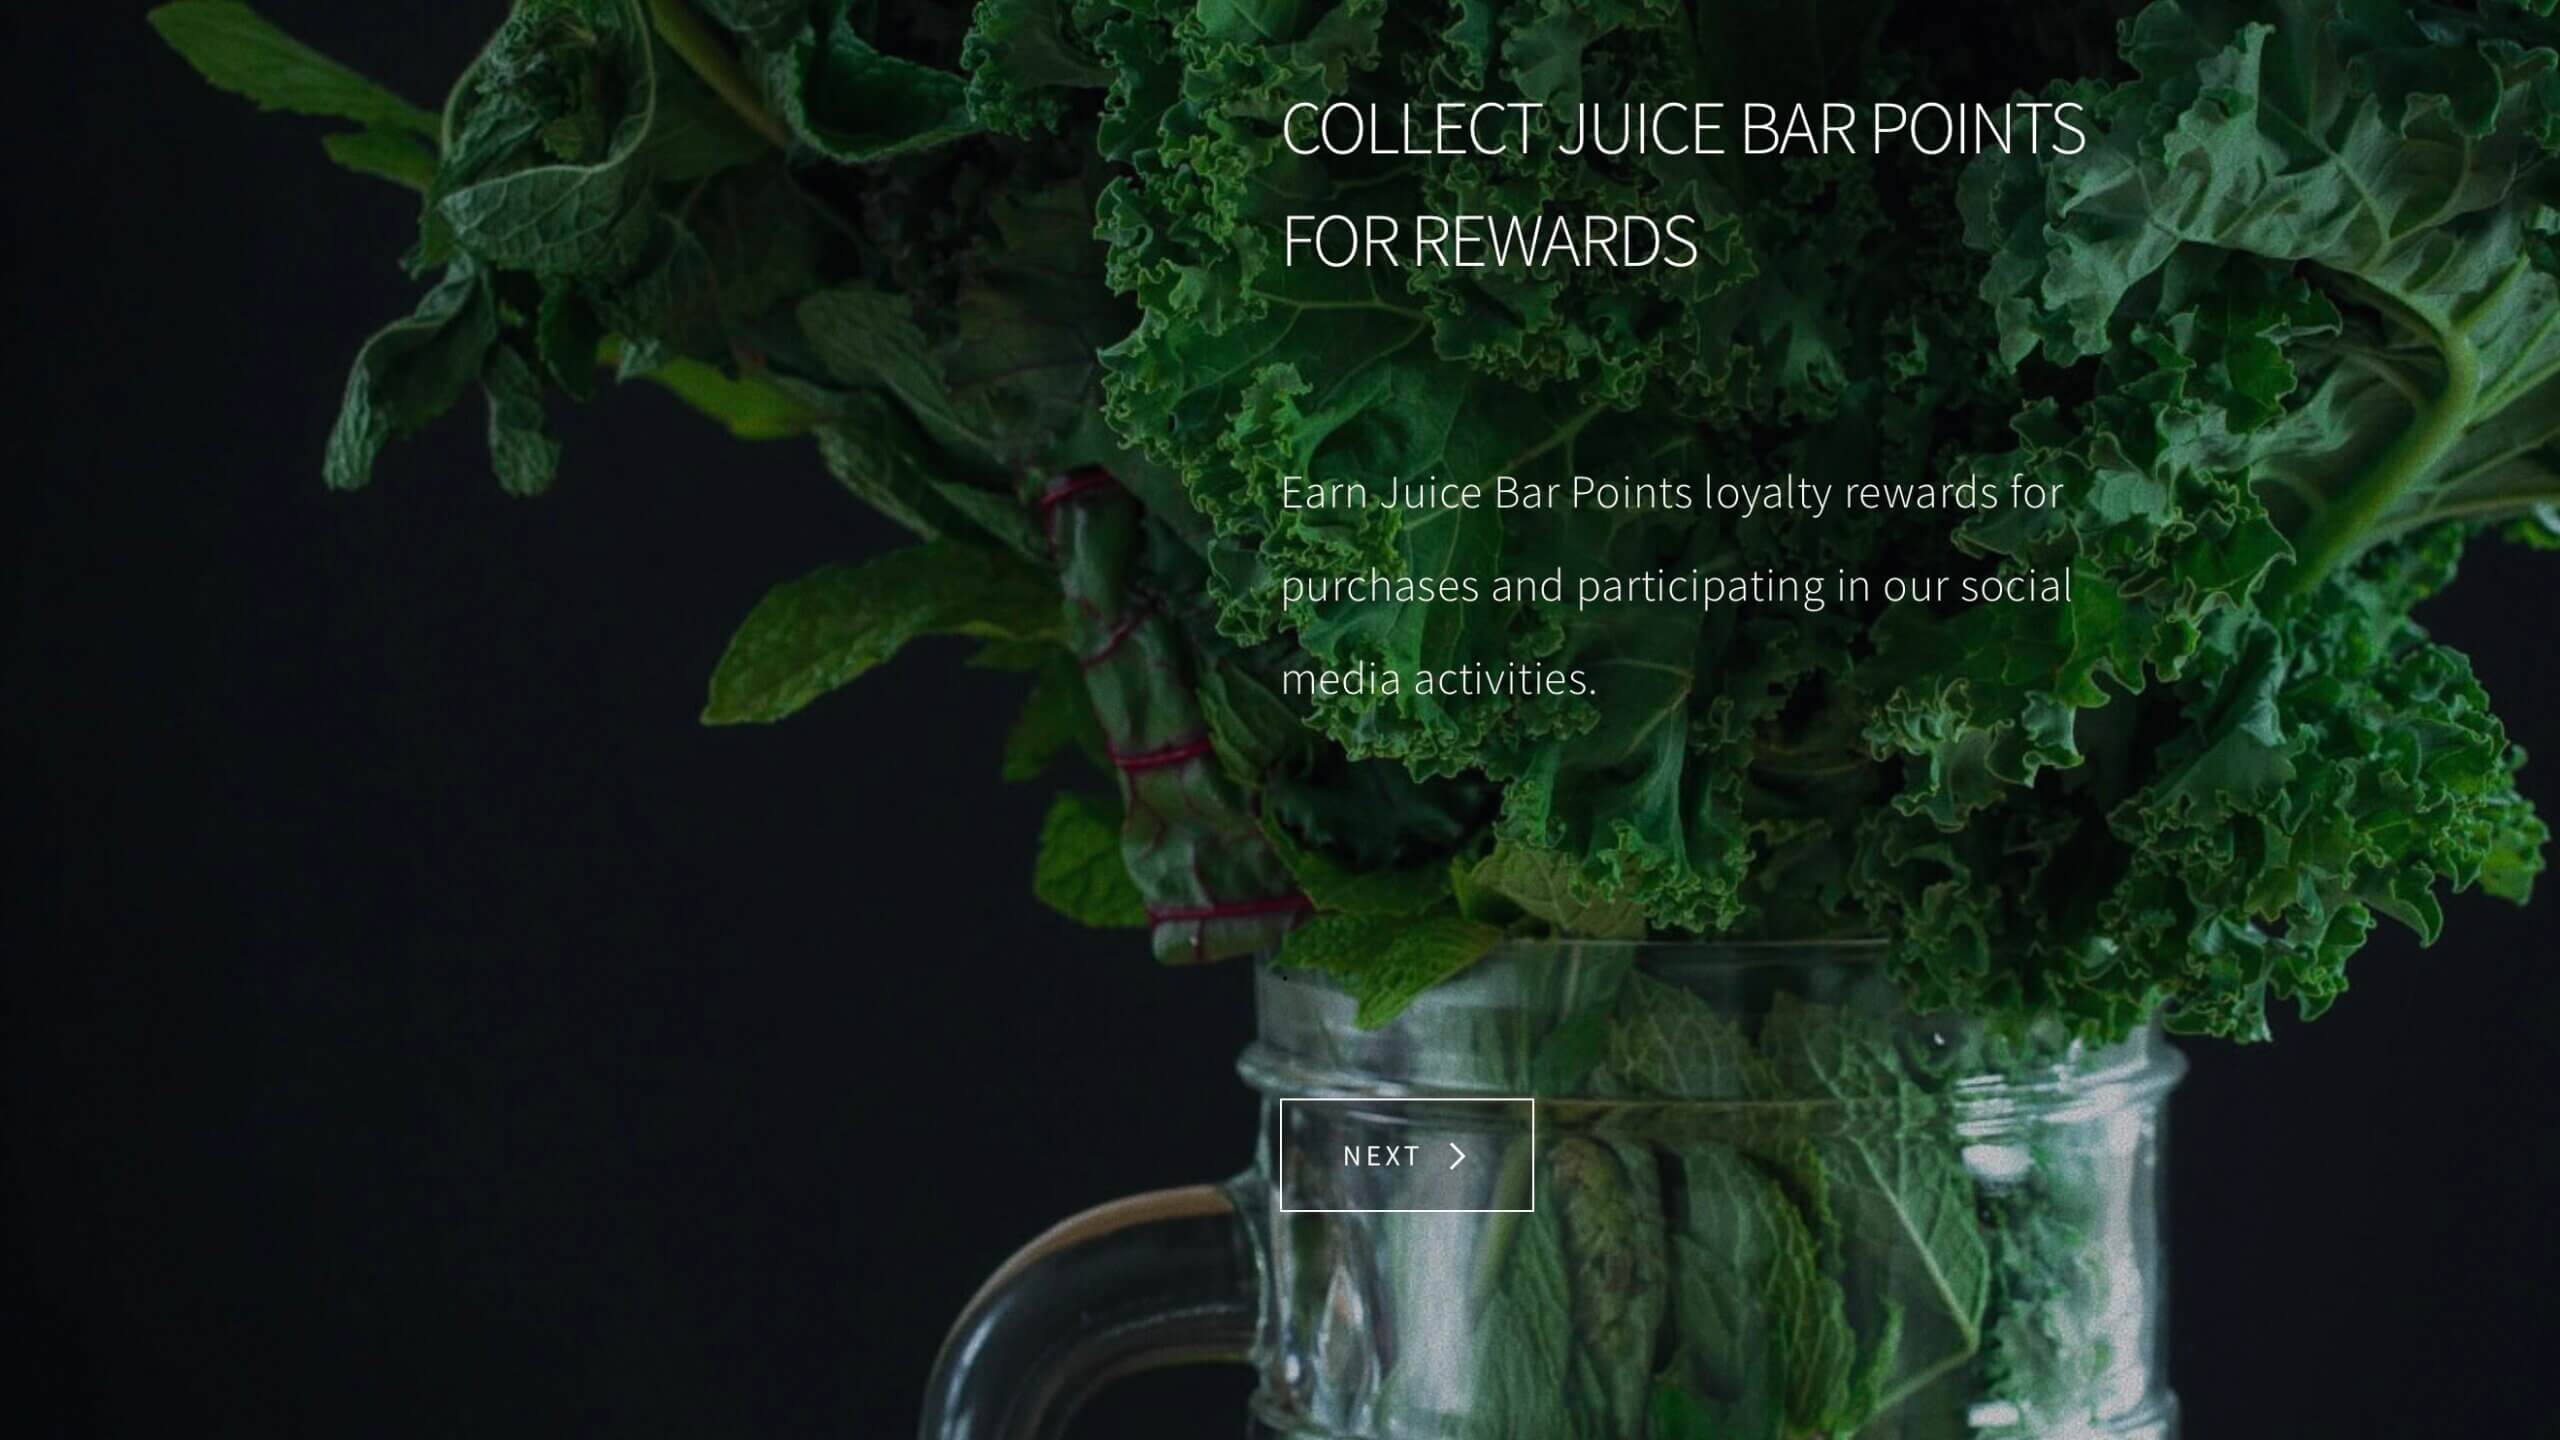 Points co Loyalty Rewards App Apple Wallet Instagram Branding Campaign j66co